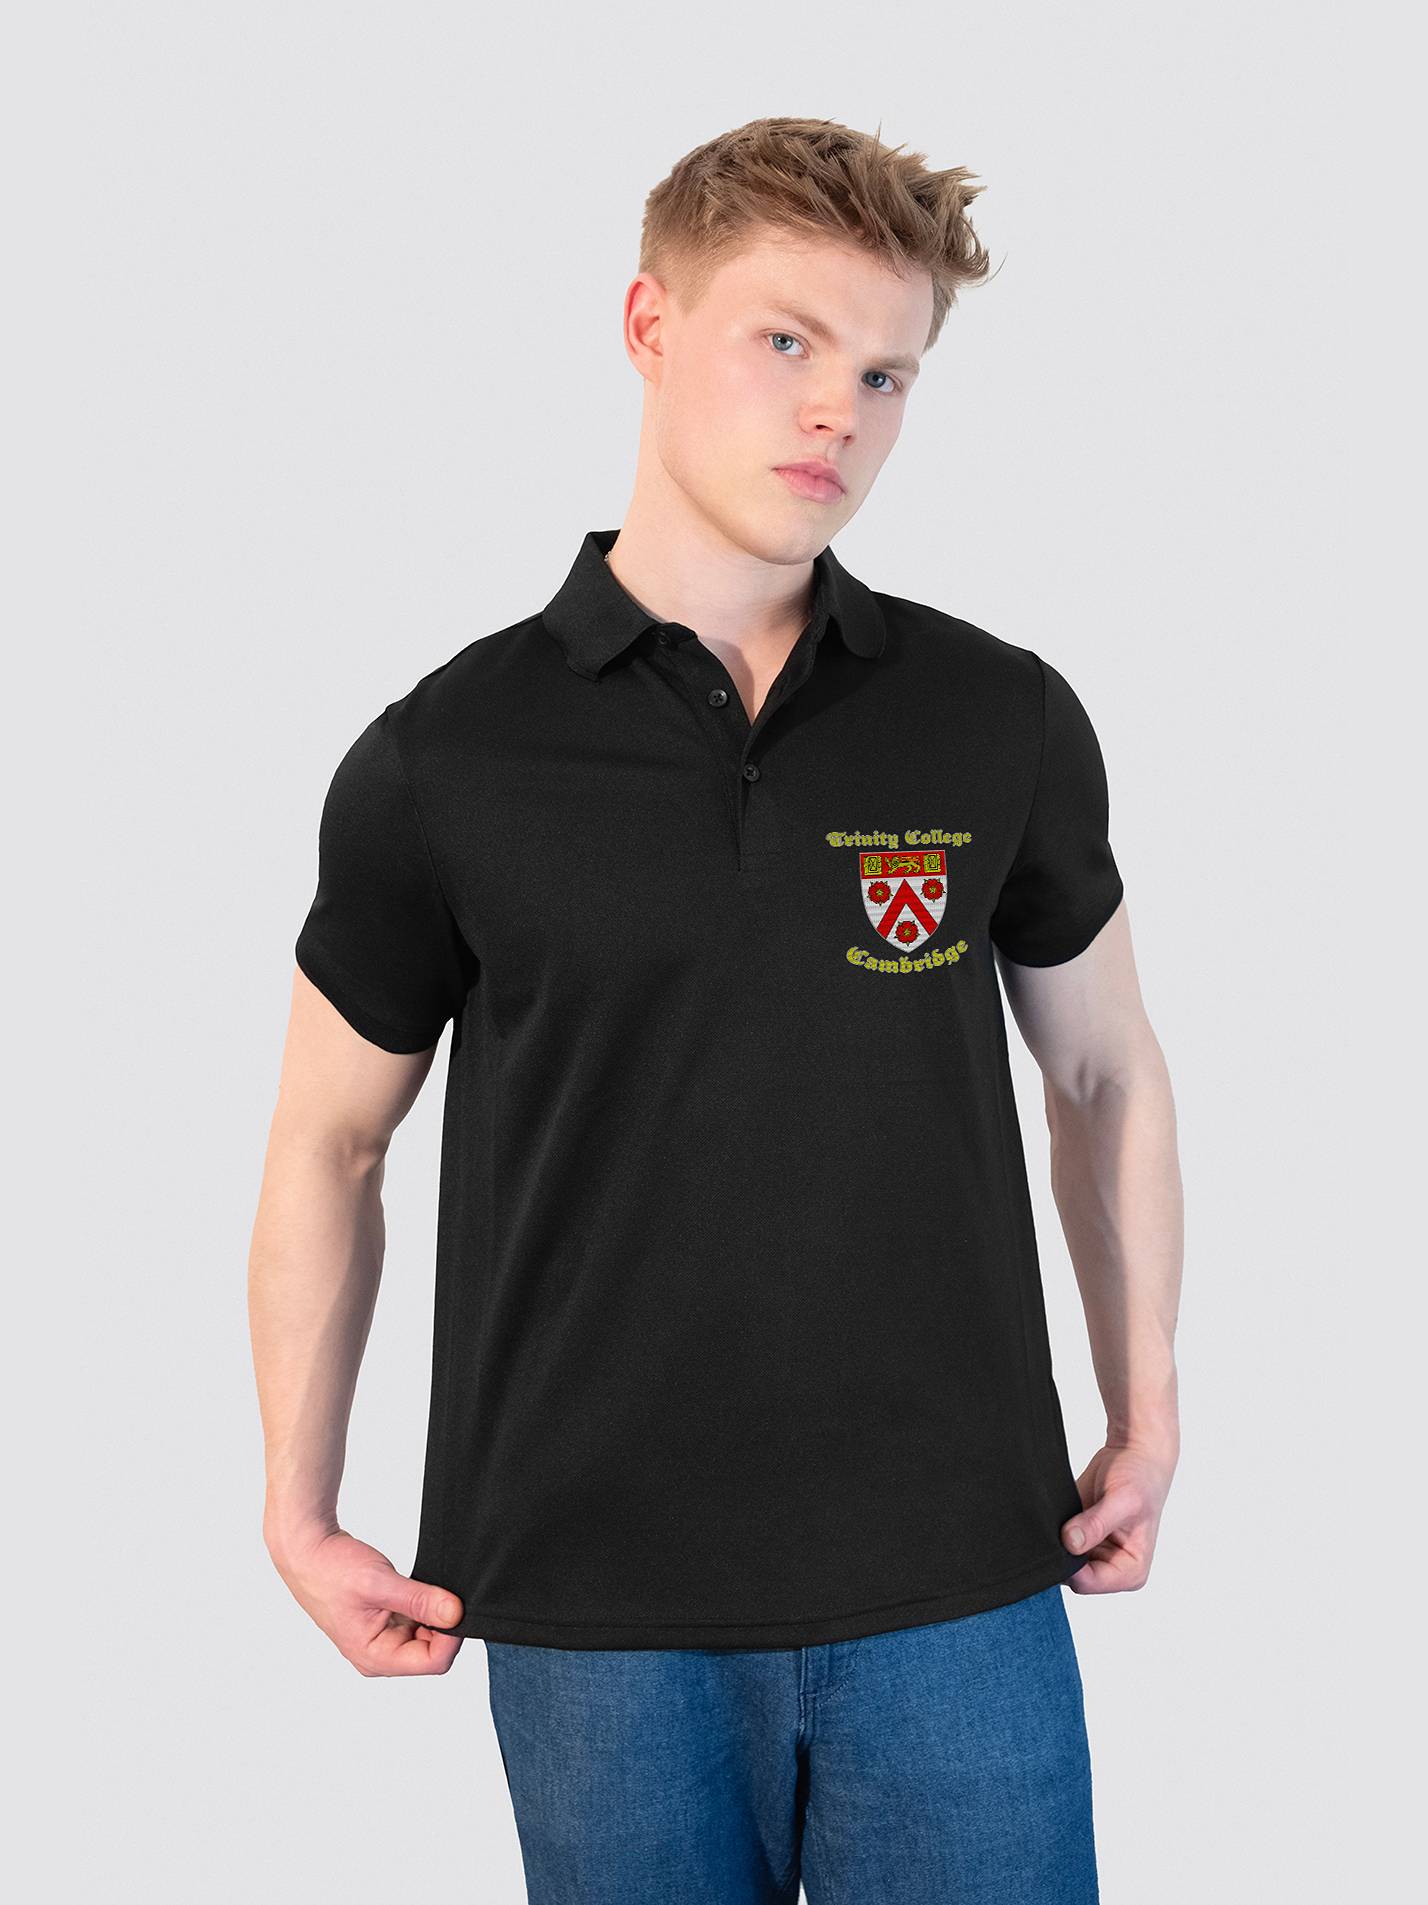 Trinity College Cambridge Sustainable Men's Polo Shirt